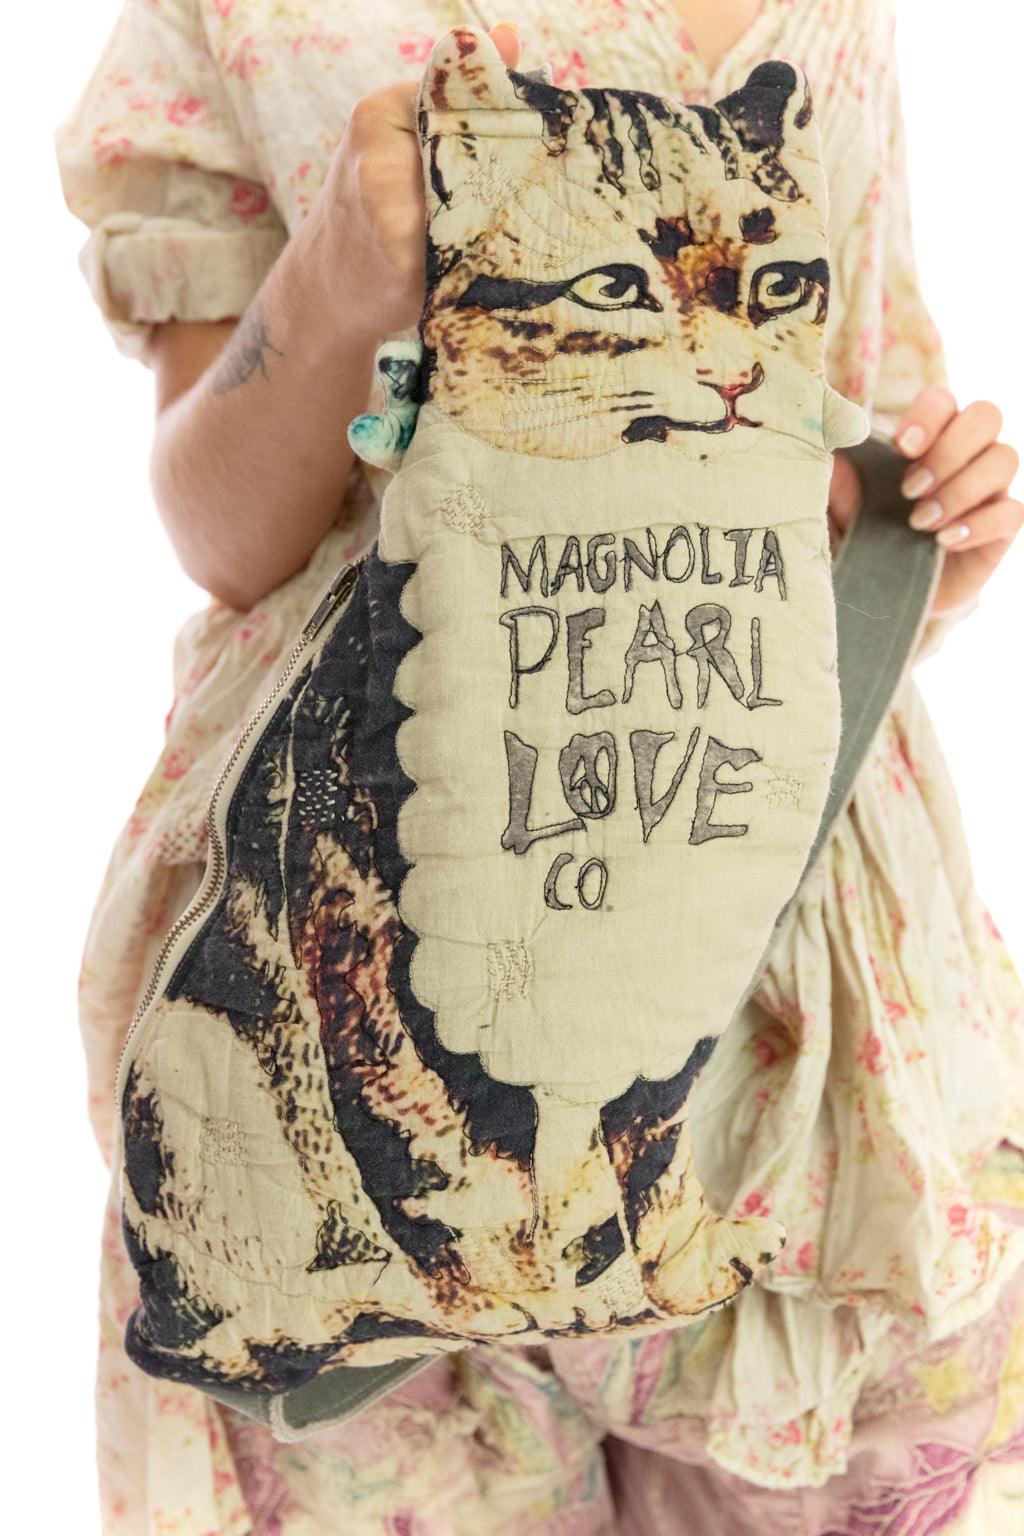 MP Love Co. Kitty Zipper Bag - Magnolia Pearl Clothing